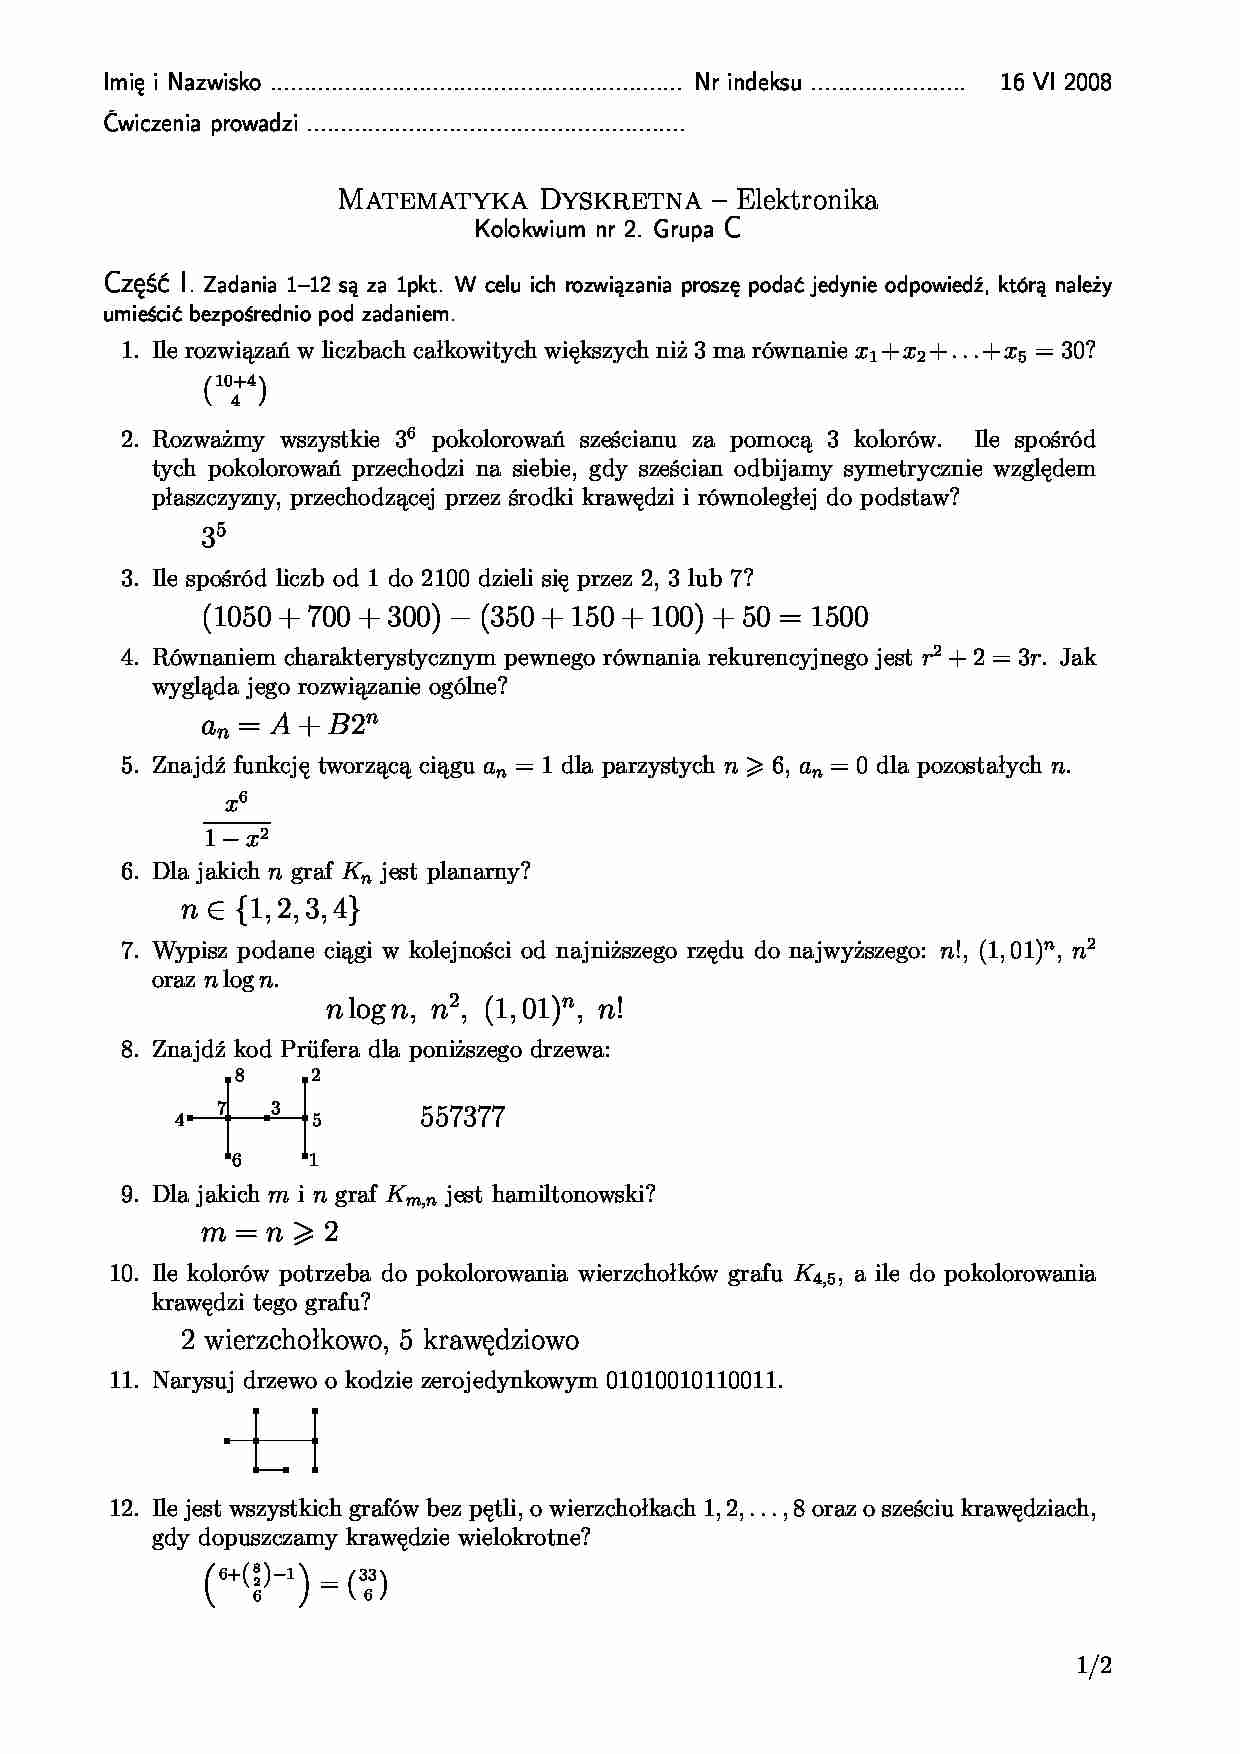 Matematyka dyskretna, elektronika - kolokwium - strona 1